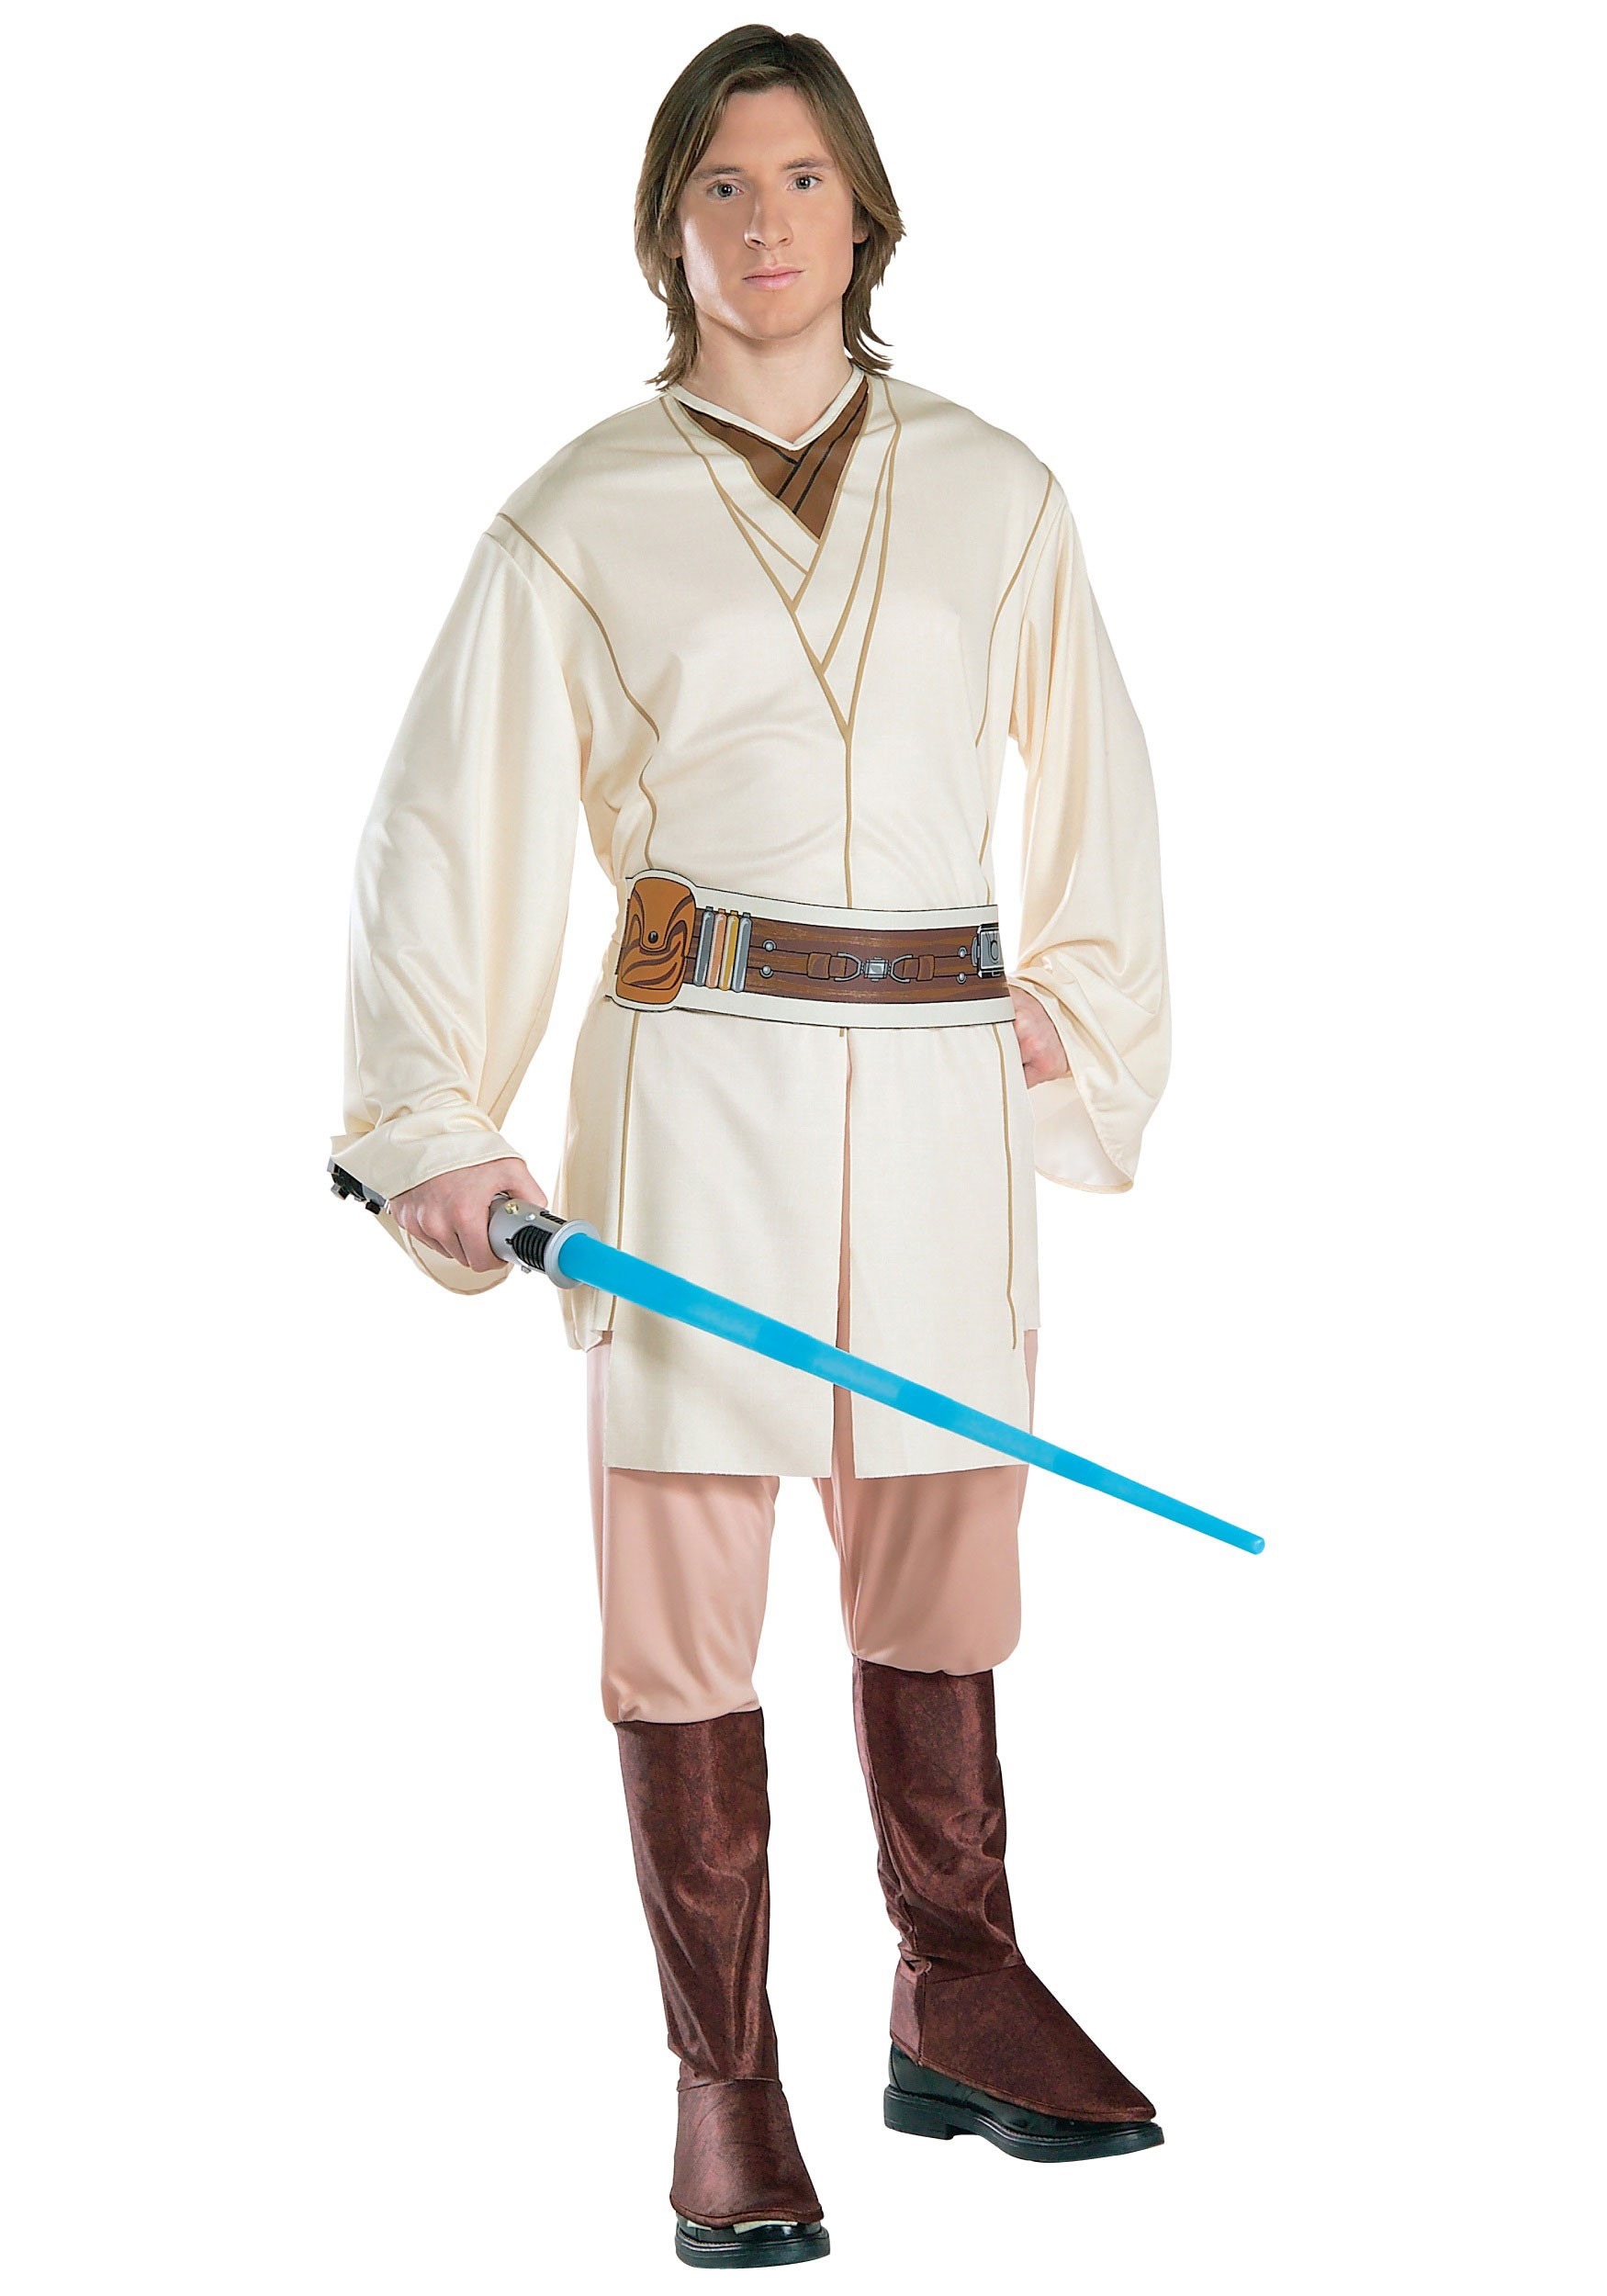 Star Wars Young Obi-Wan Kenobi Adult Costume